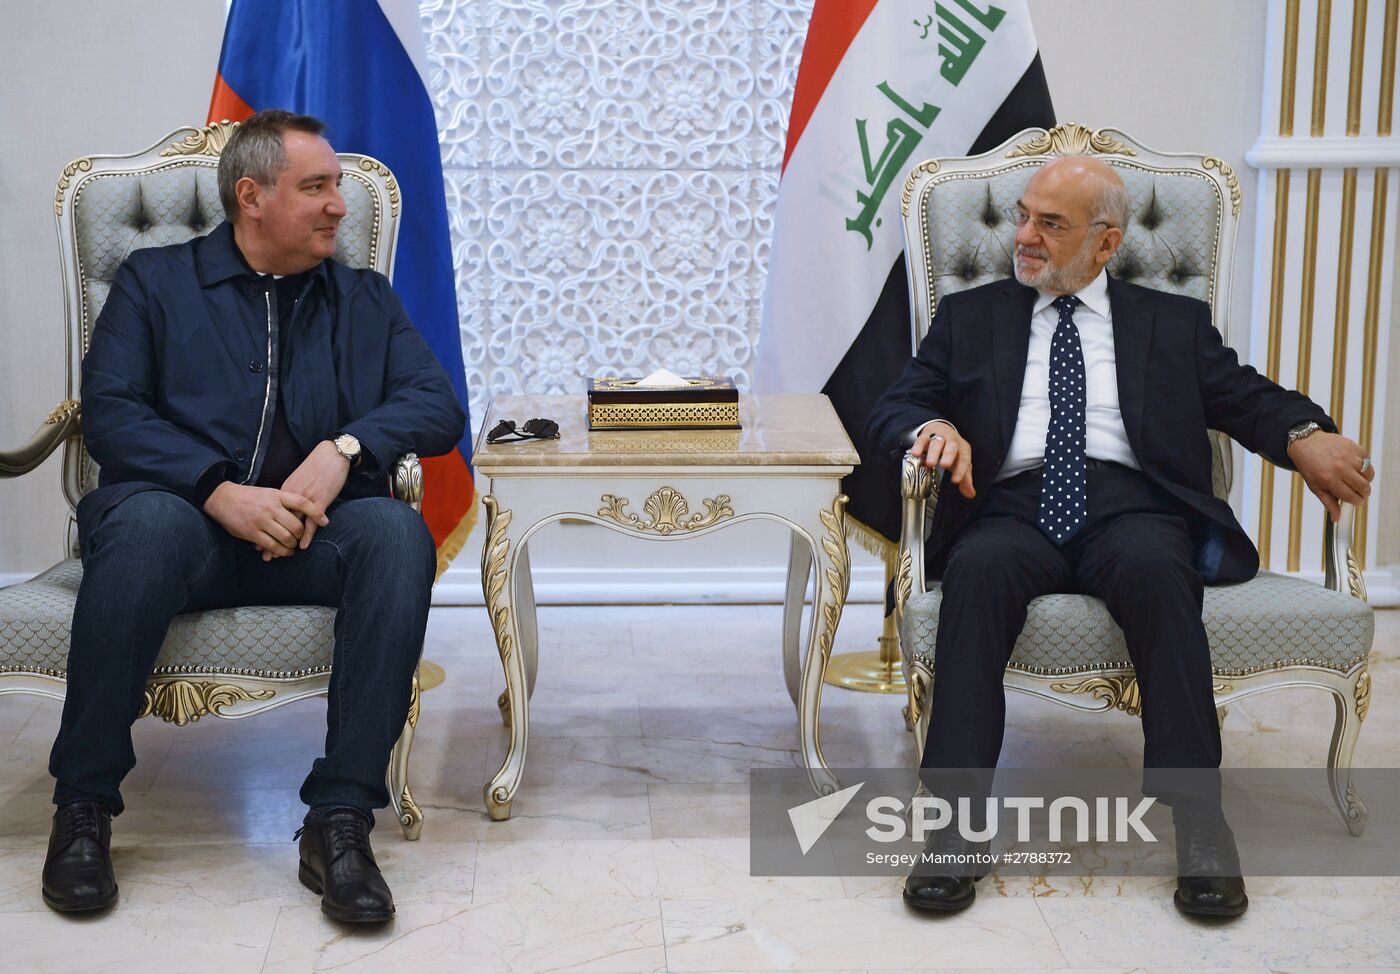 Russian Deputy Prime Minister Dmitry Rogozin's visit to Iraq